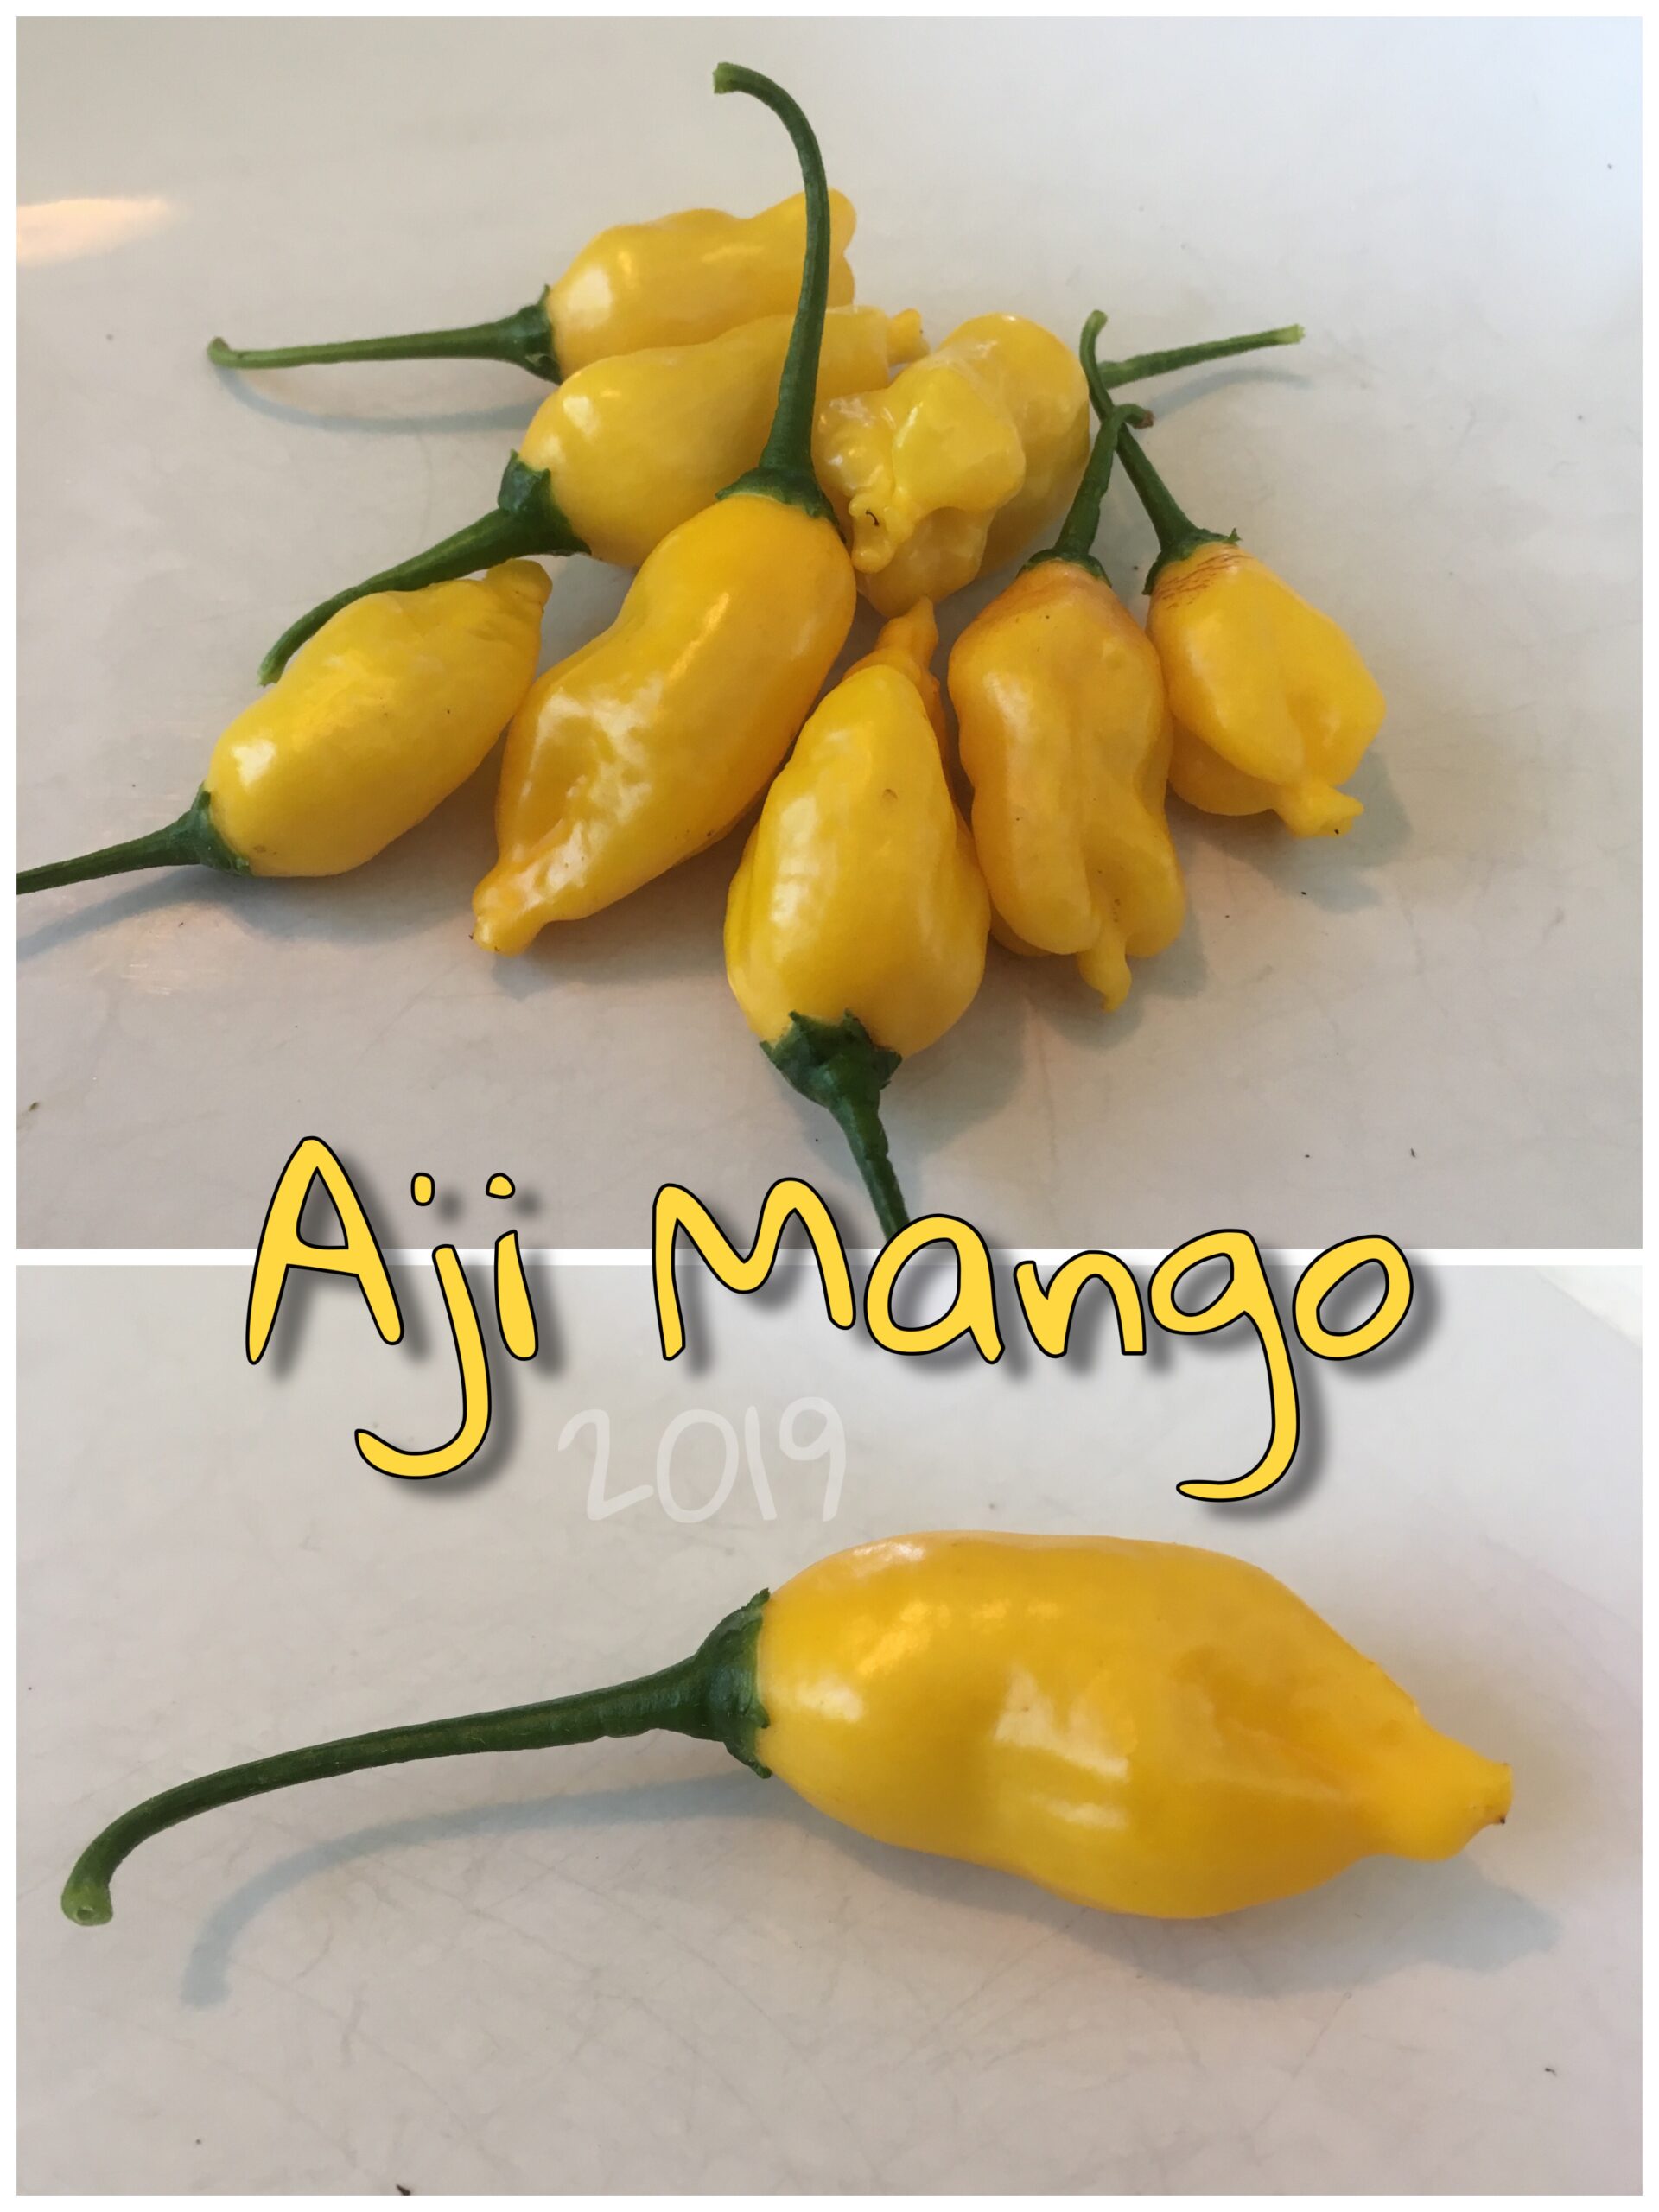 Aji Mango